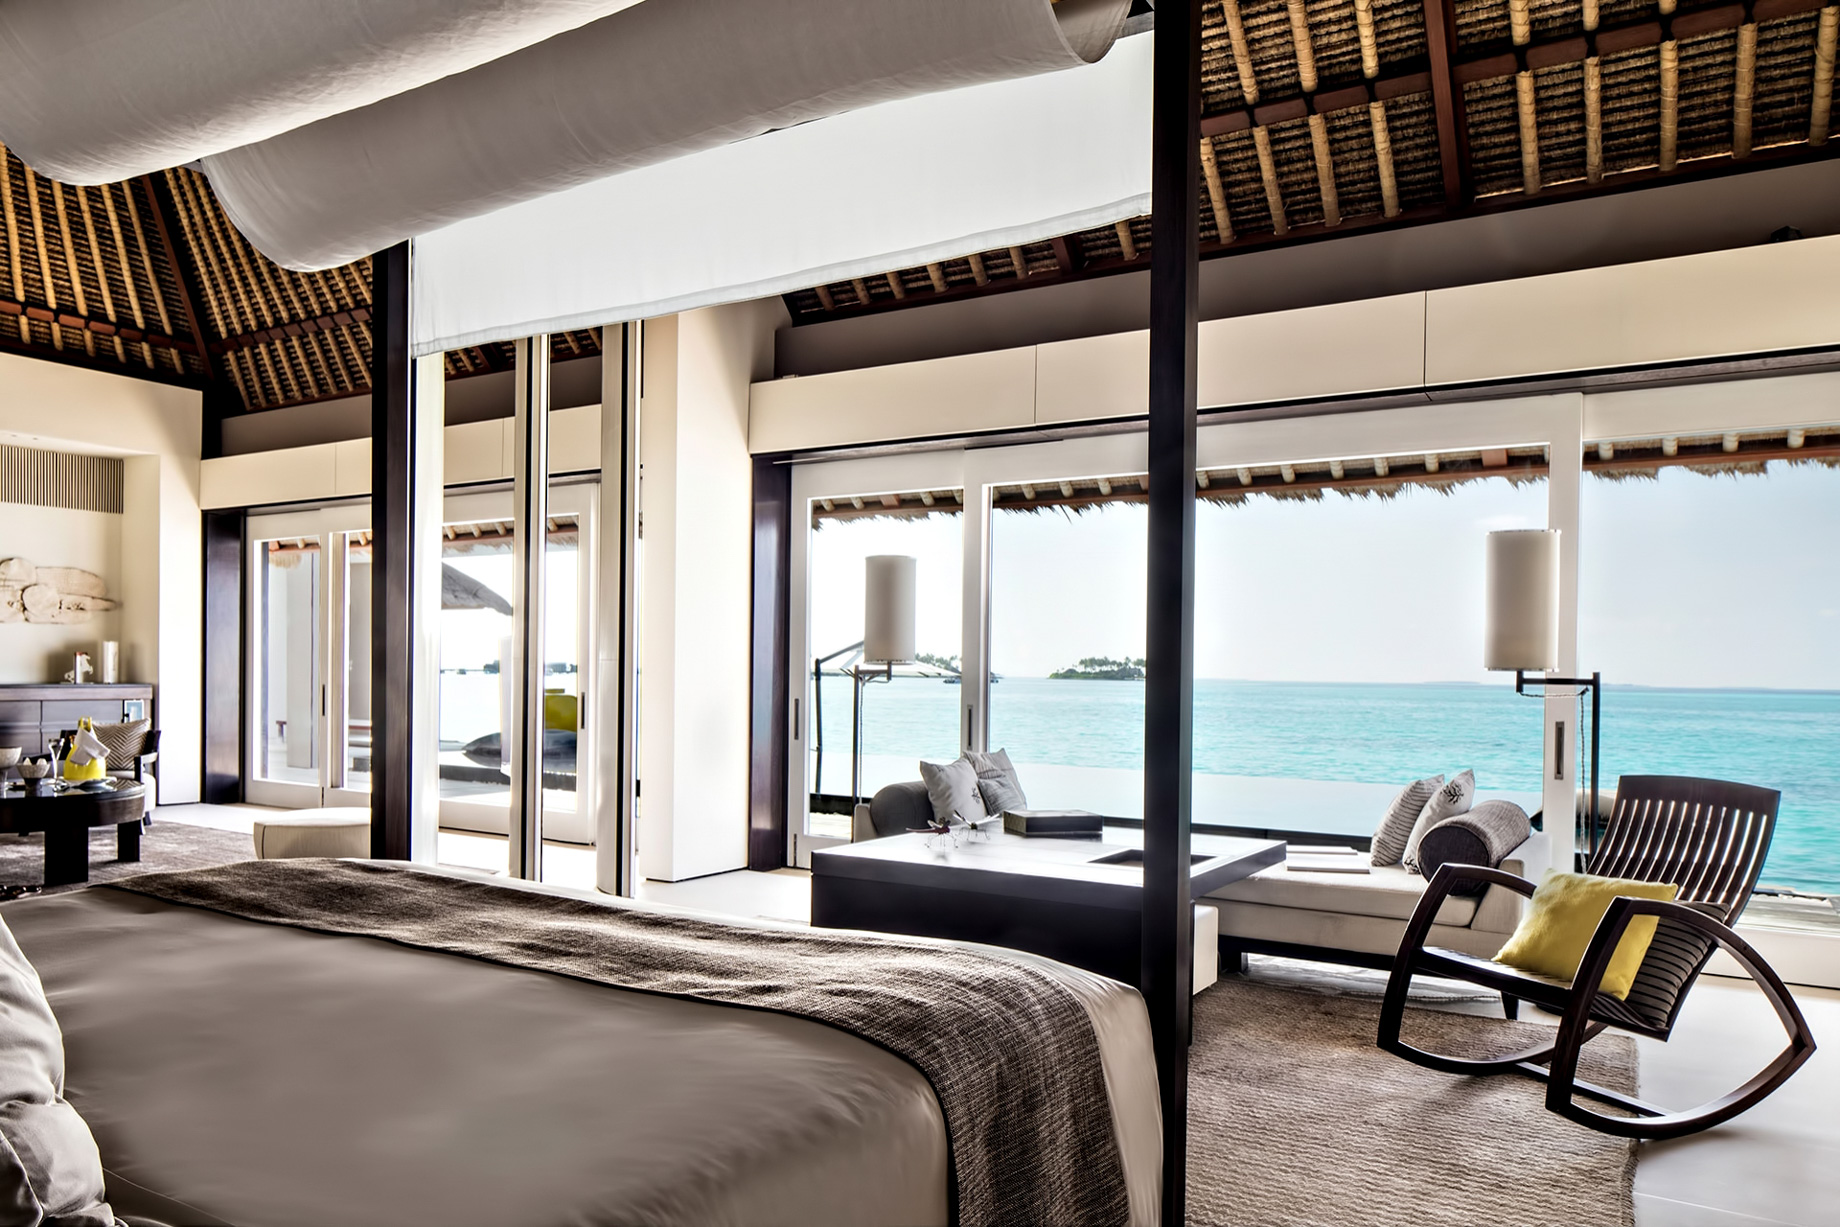 Cheval Blanc Randheli Resort - Noonu Atoll, Maldives - Overwater Villa Bedroom Ocean View